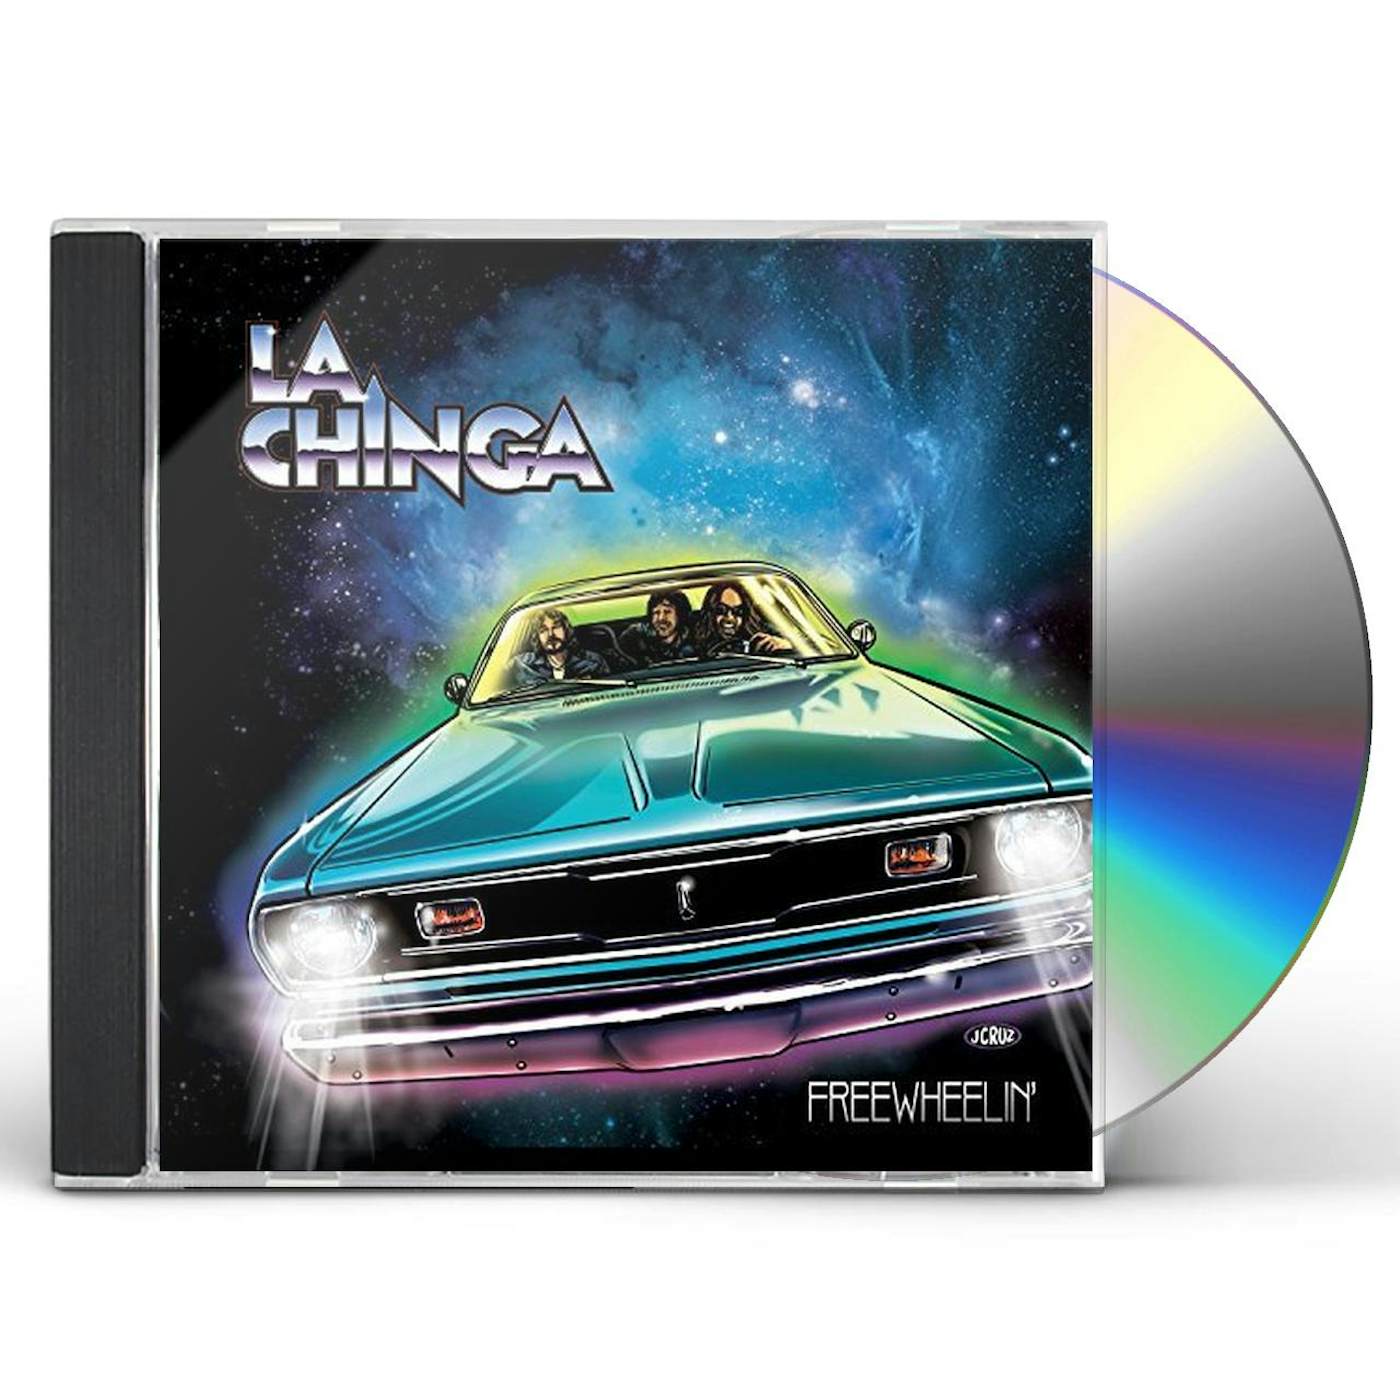 La Chinga FREEWHEELIN CD